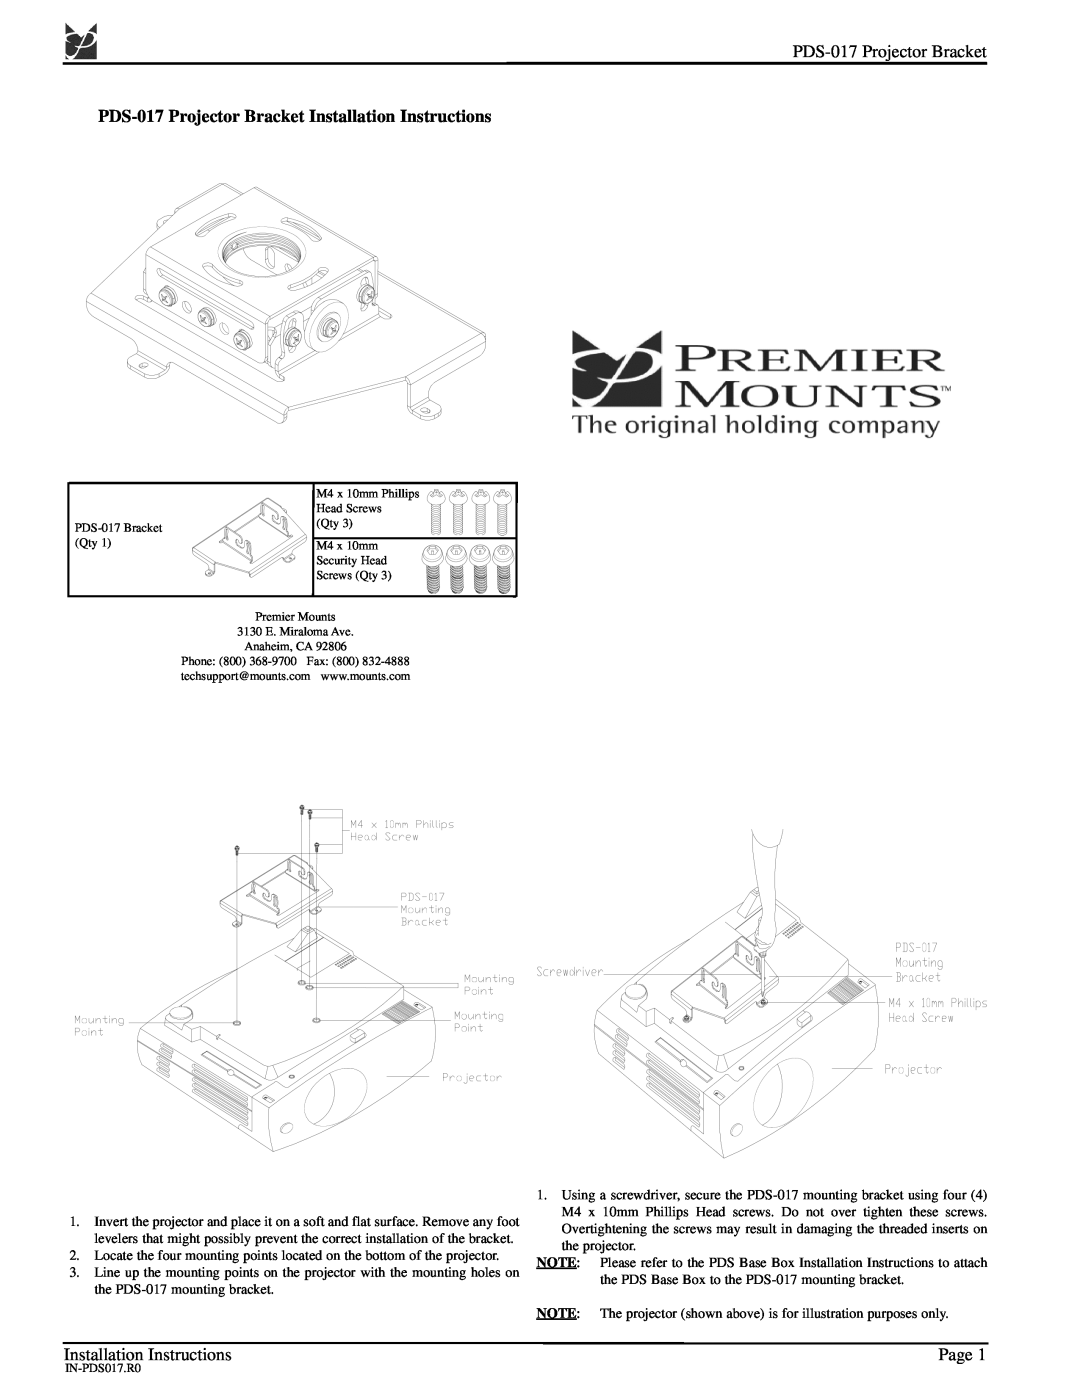 Premier Mounts installation instructions PDS-017 Projector Bracket Installation Instructions, Page 